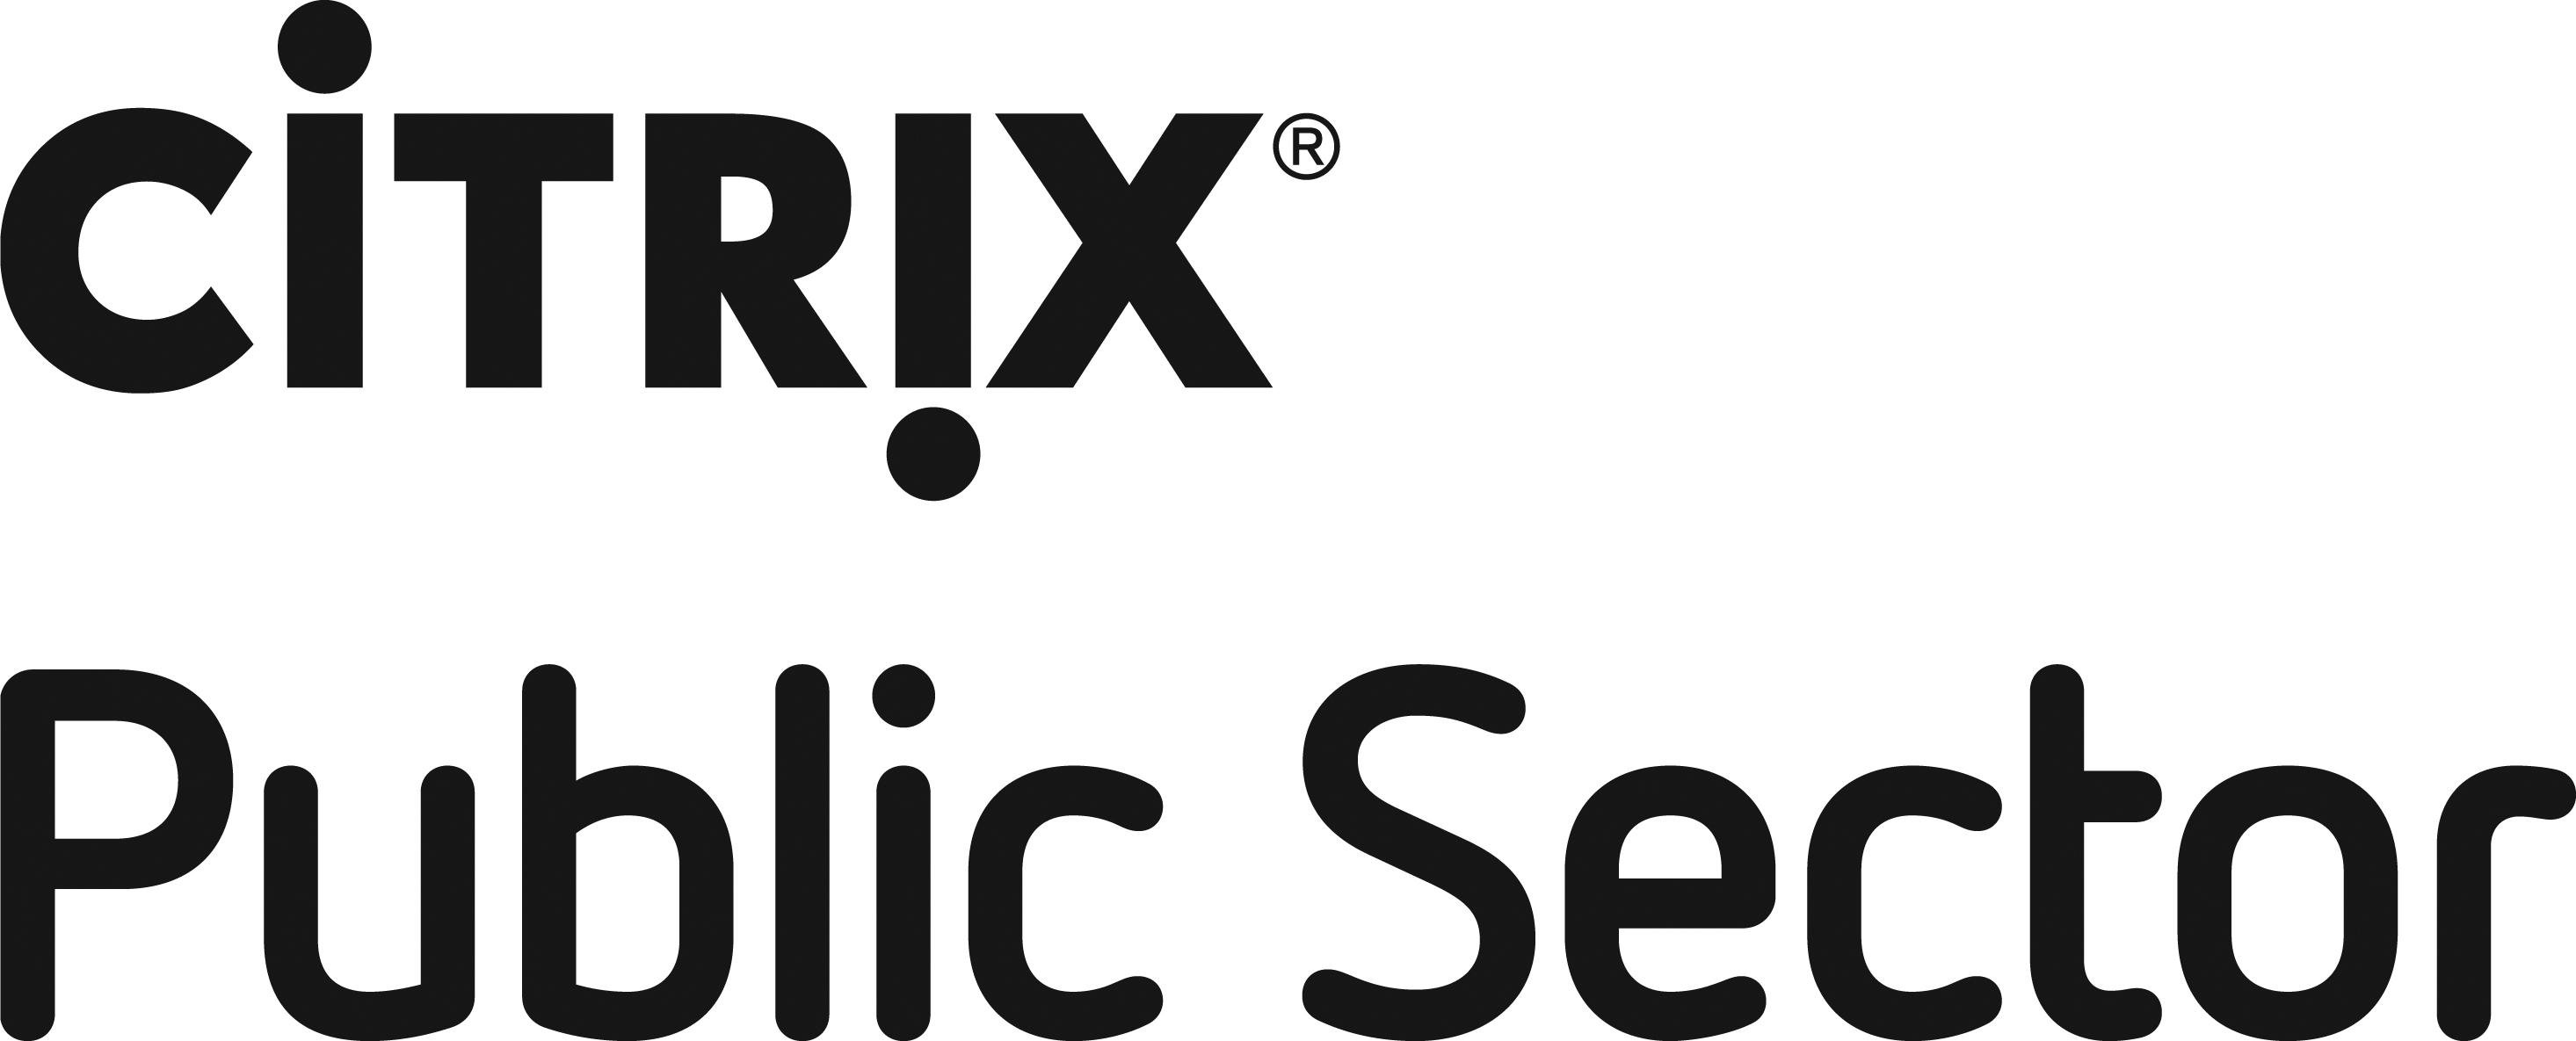 t4 Citrix Public Sector logo vert K.jpg